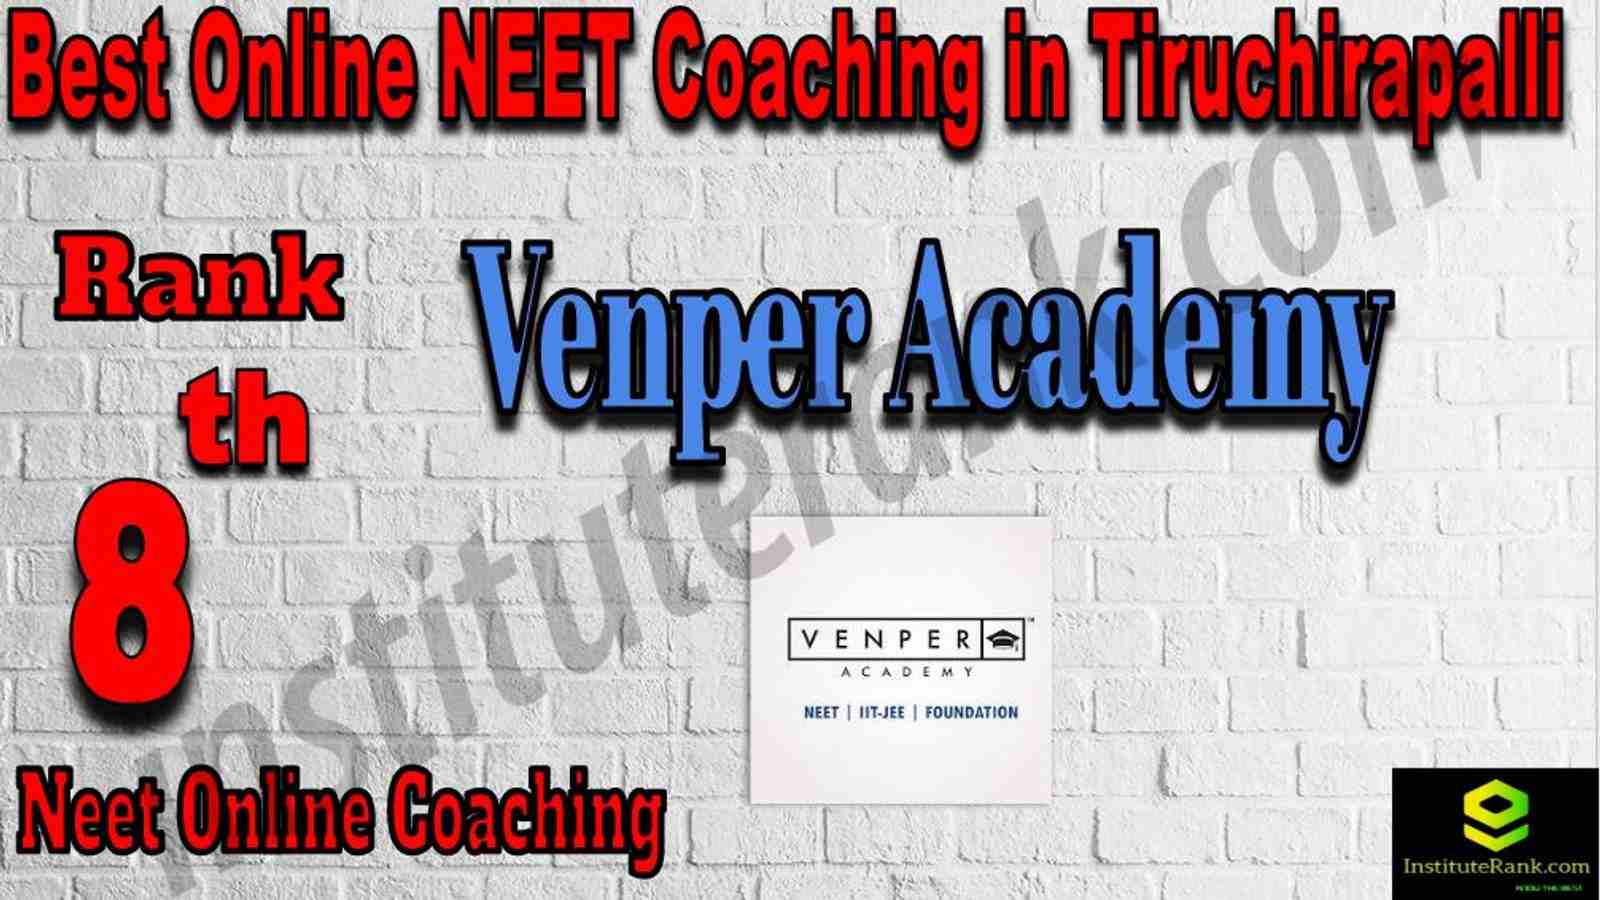 8th Best Online Neet Coaching in Tiruchirapalli